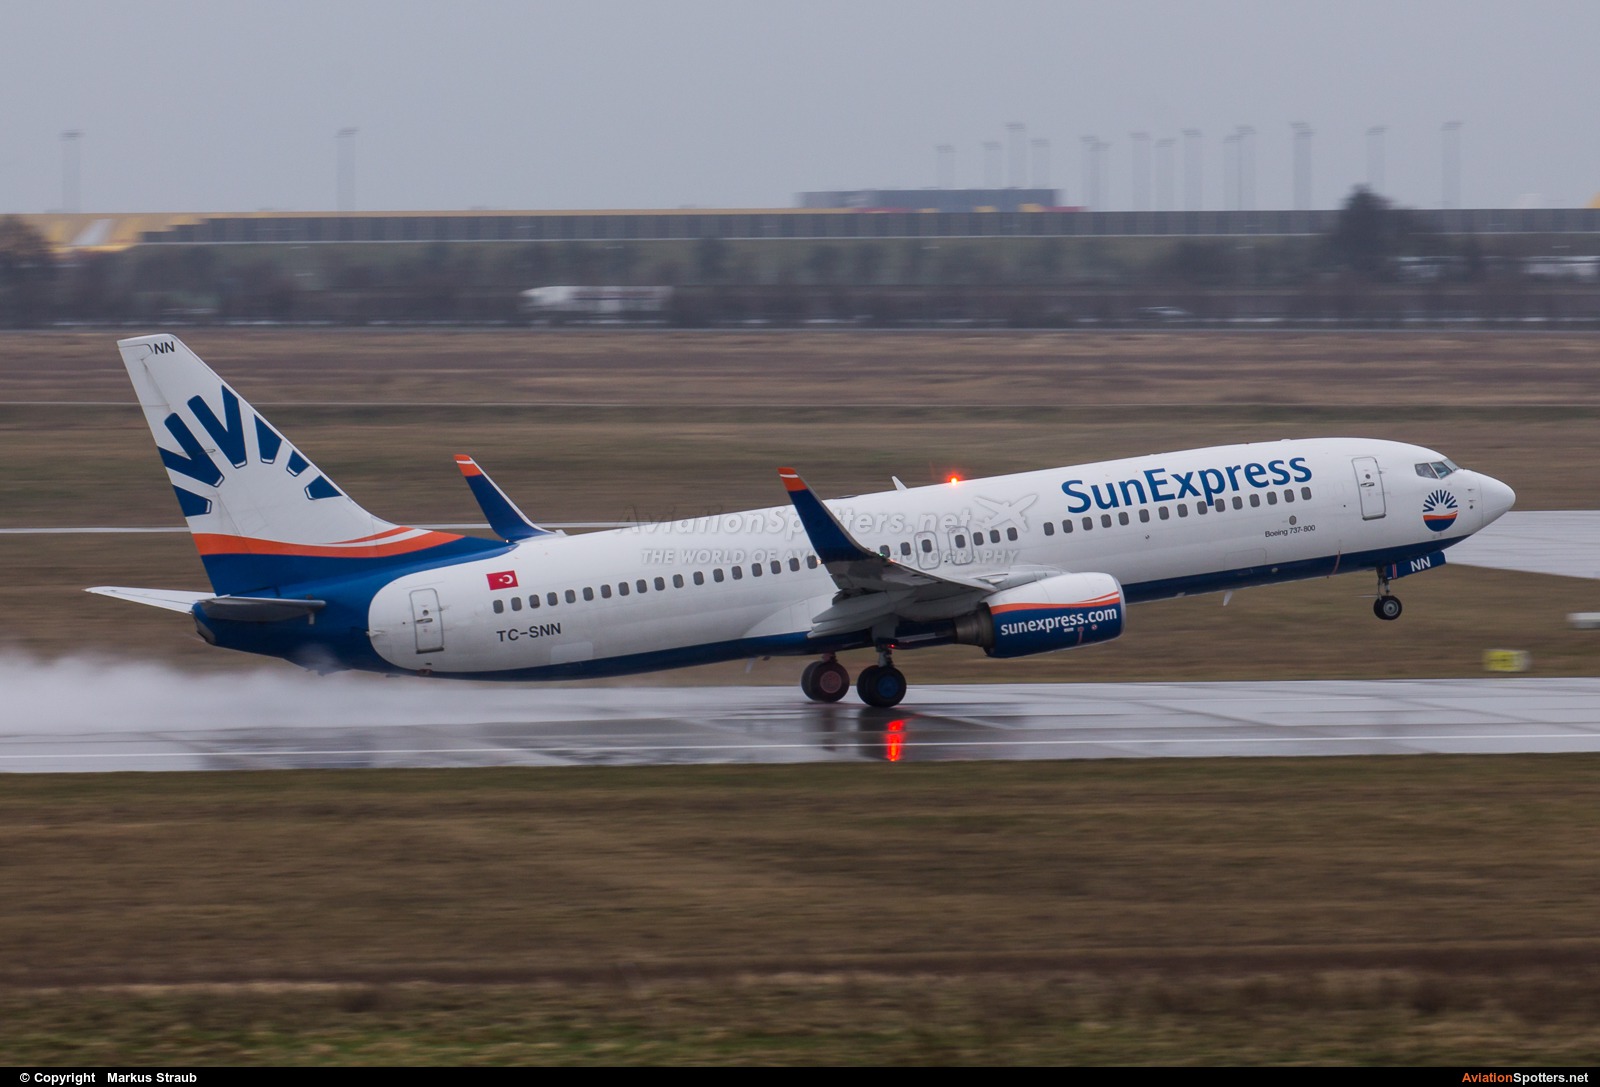 SunExpress  -  737-800  (TC-SNN) By Markus Straub  (spottermarkus)